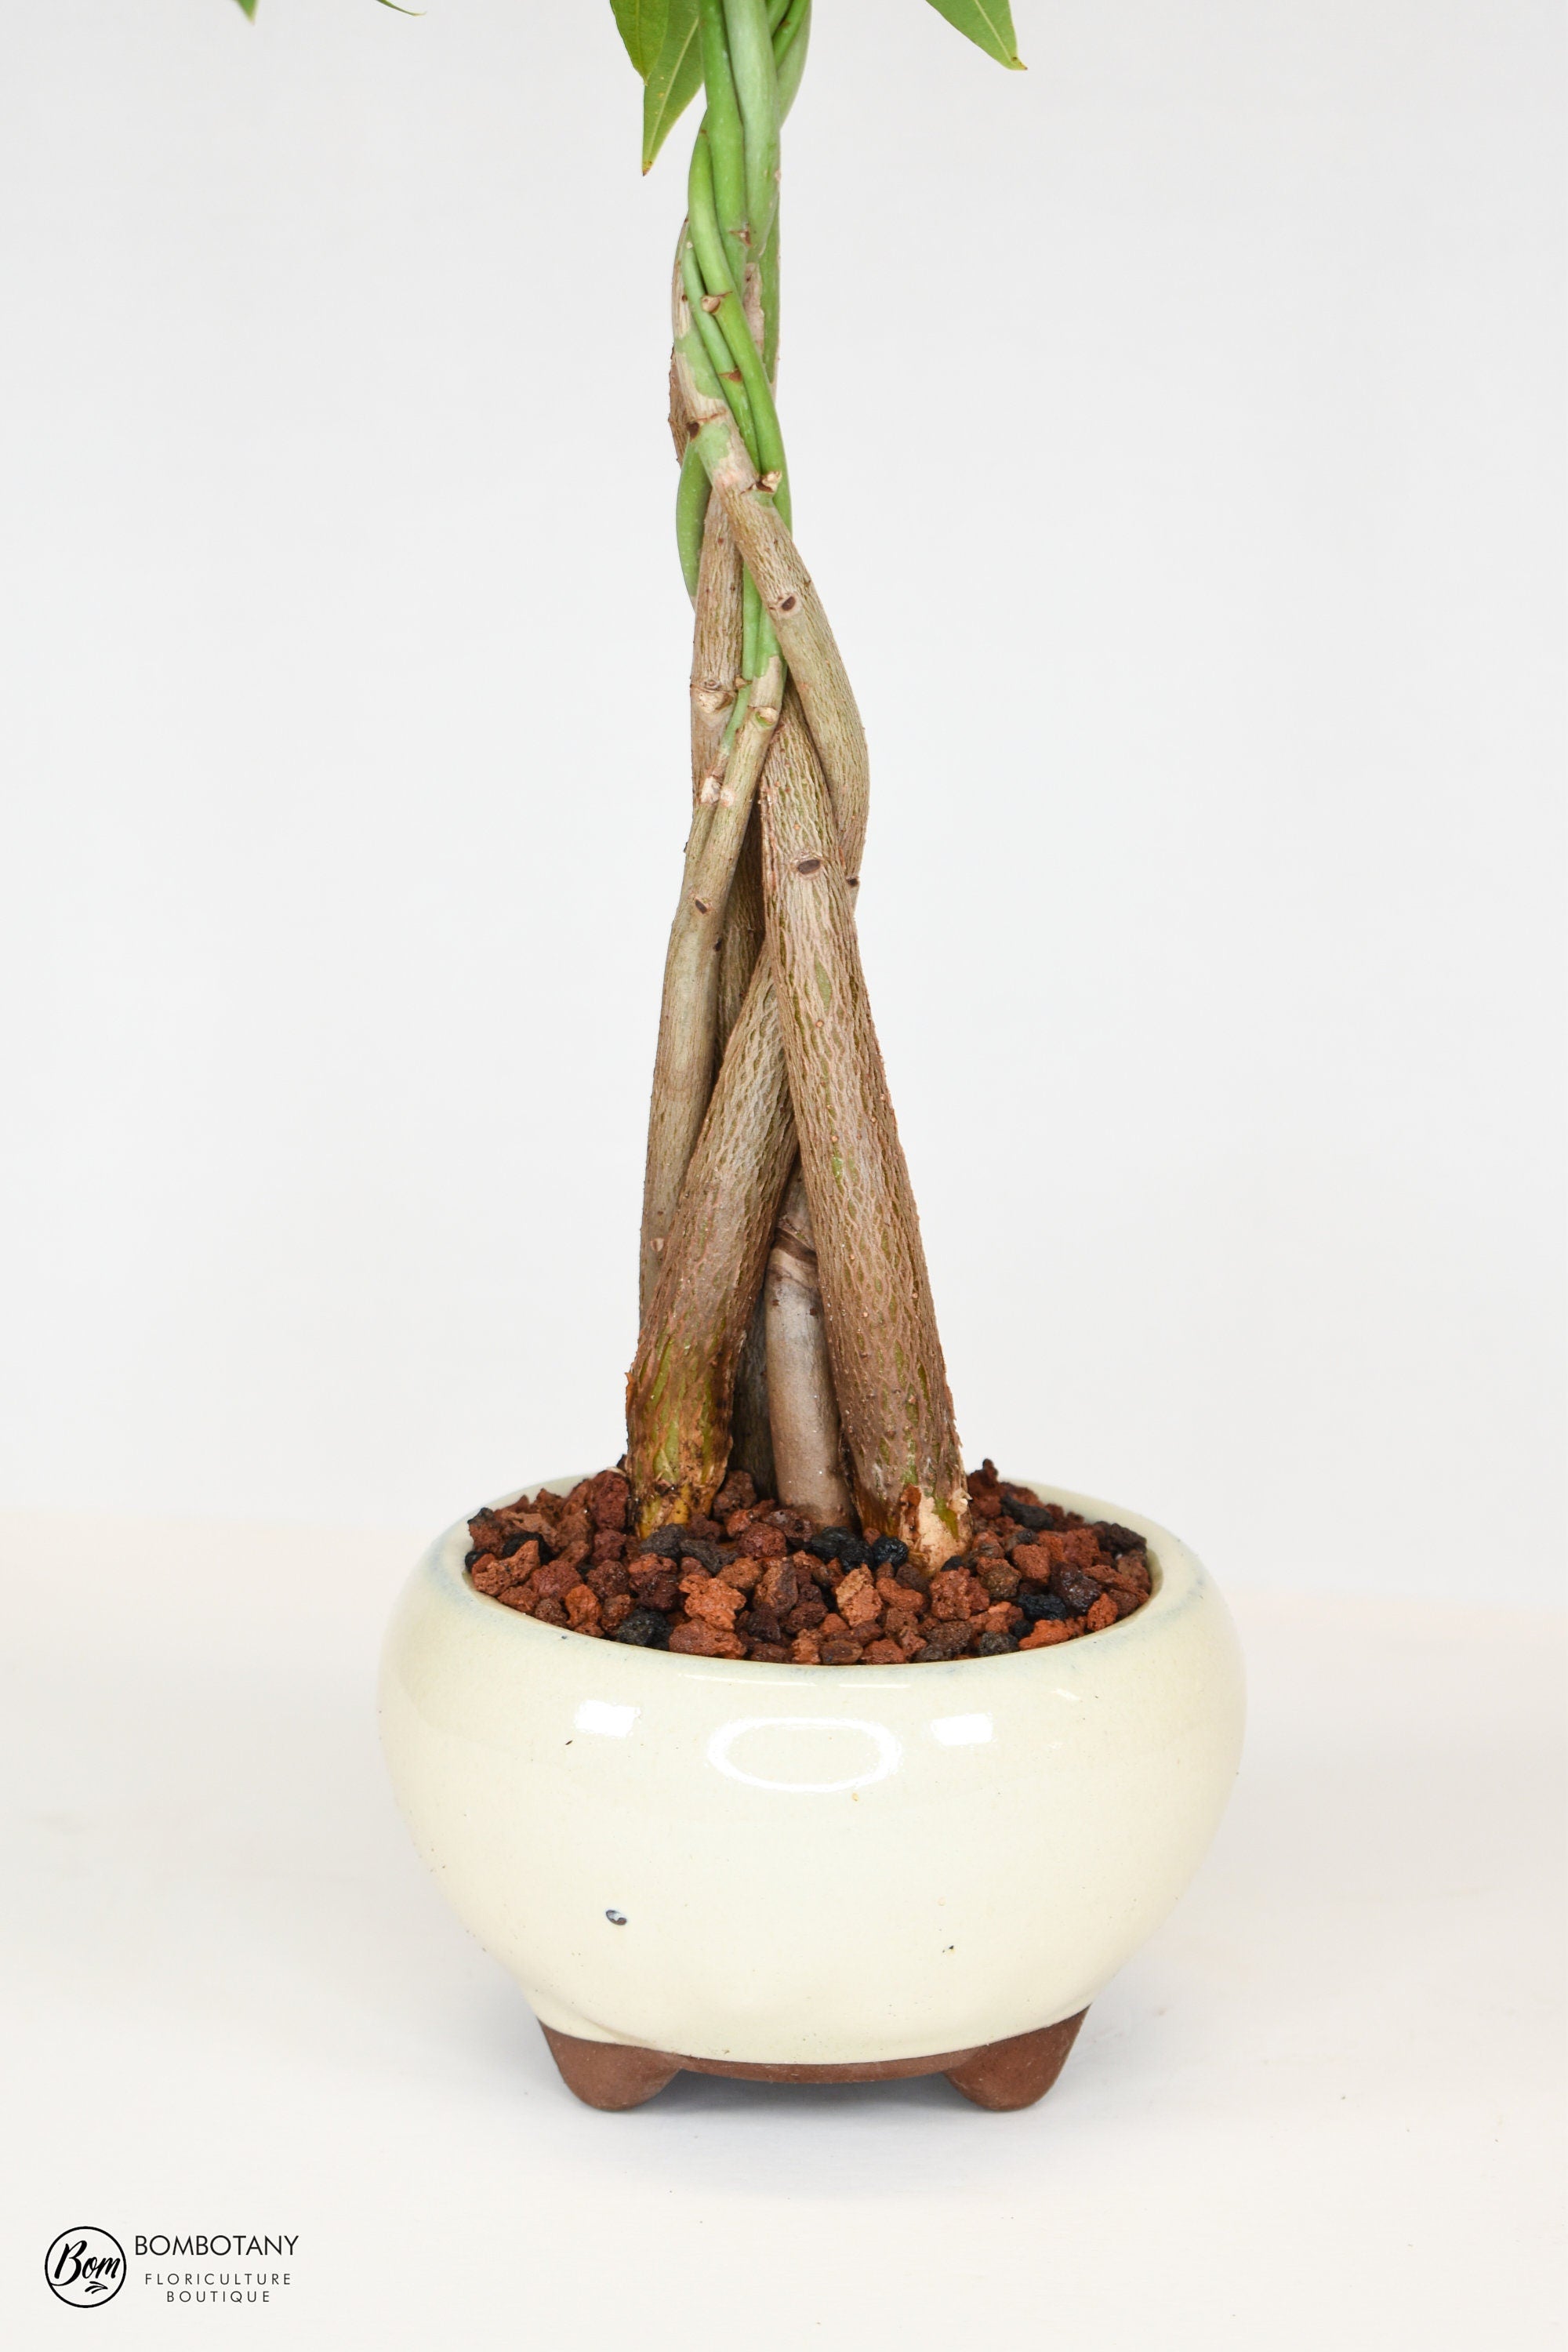 Money Tree Bonsai (Pachira Aquatica) in 5" Glazed Ceramic